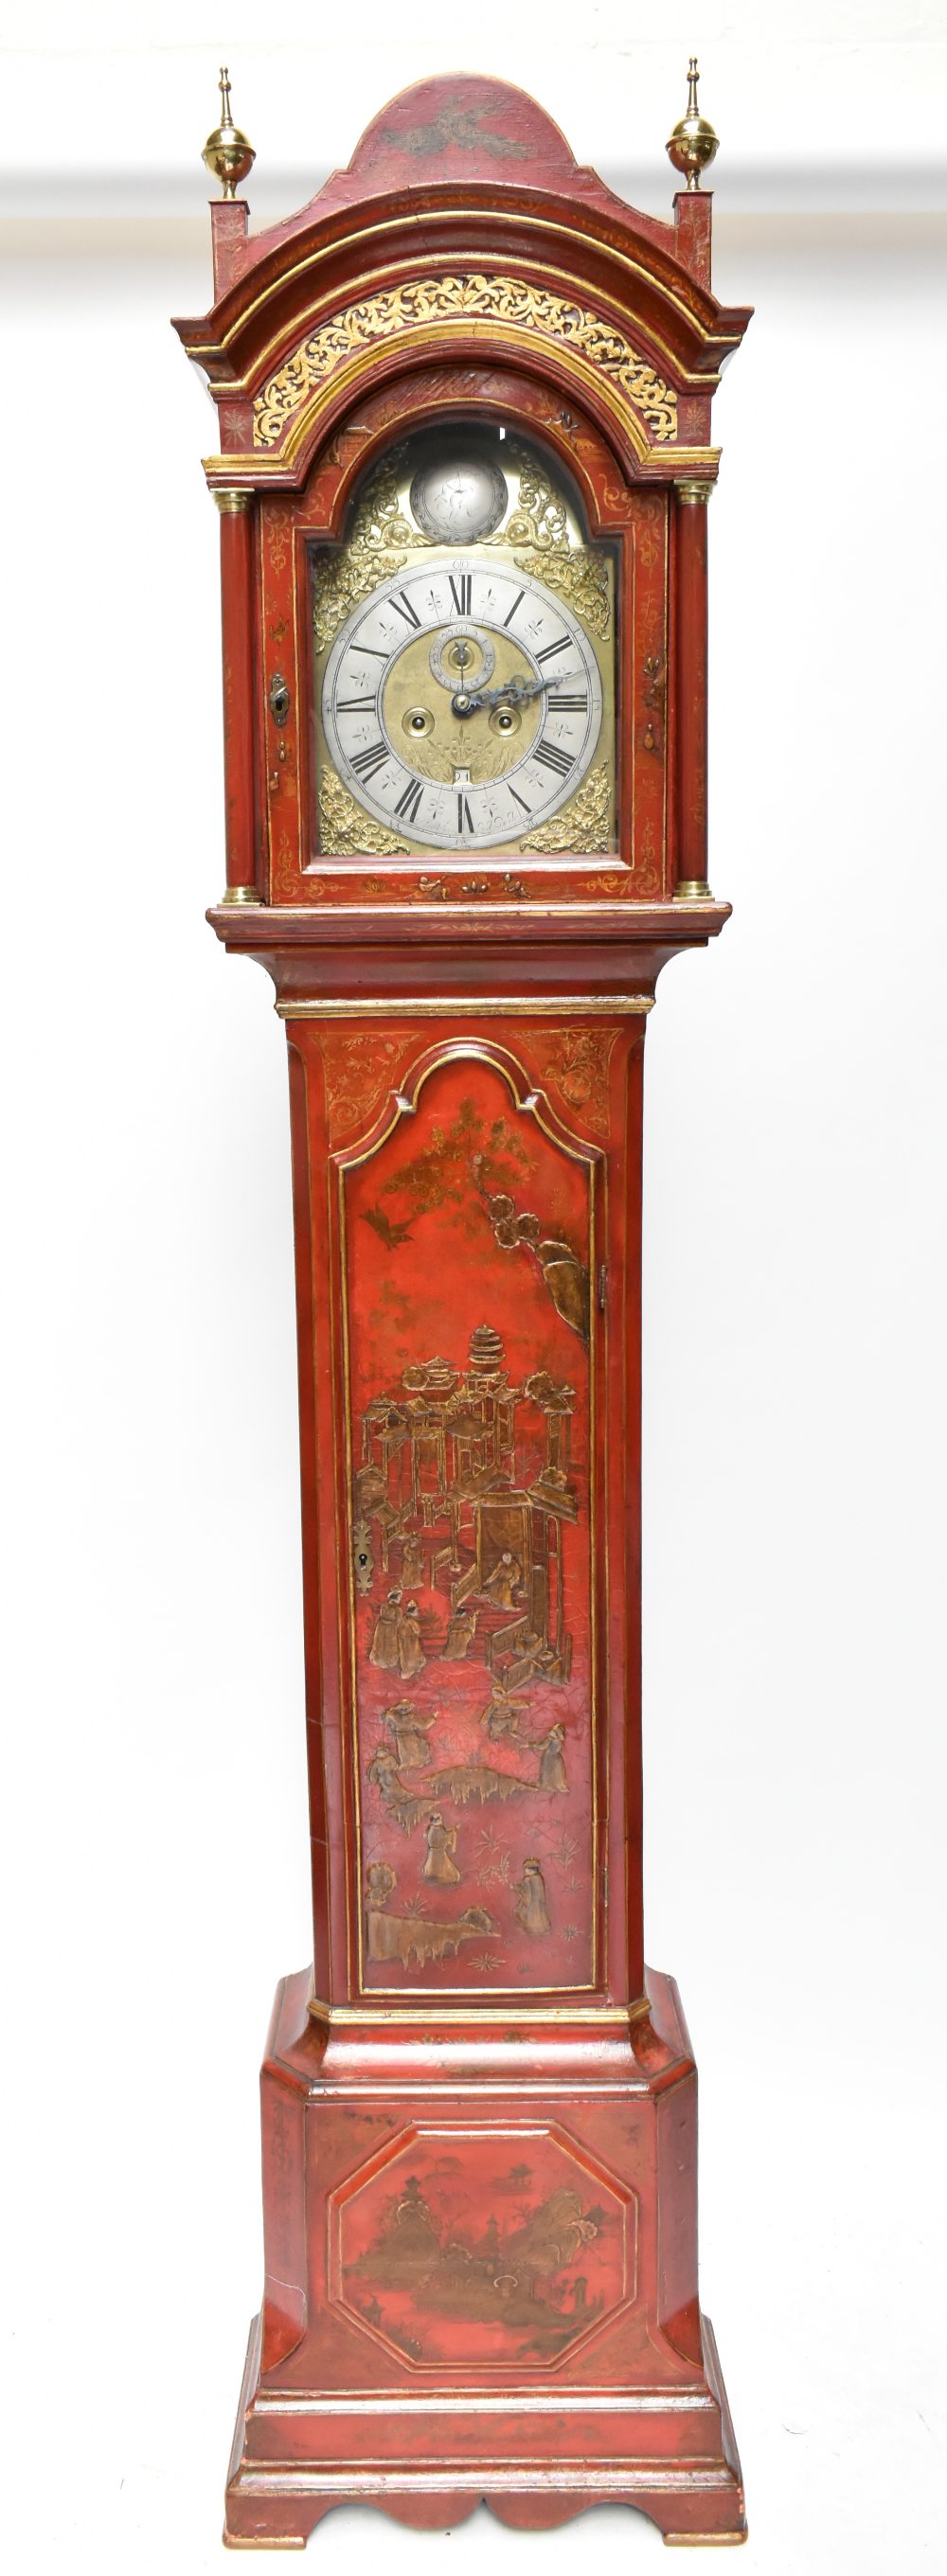 JOSEPH JACKMAN JNR OF LONDON BRIDGE; an English red japanned longcase clock, the brass dial signed